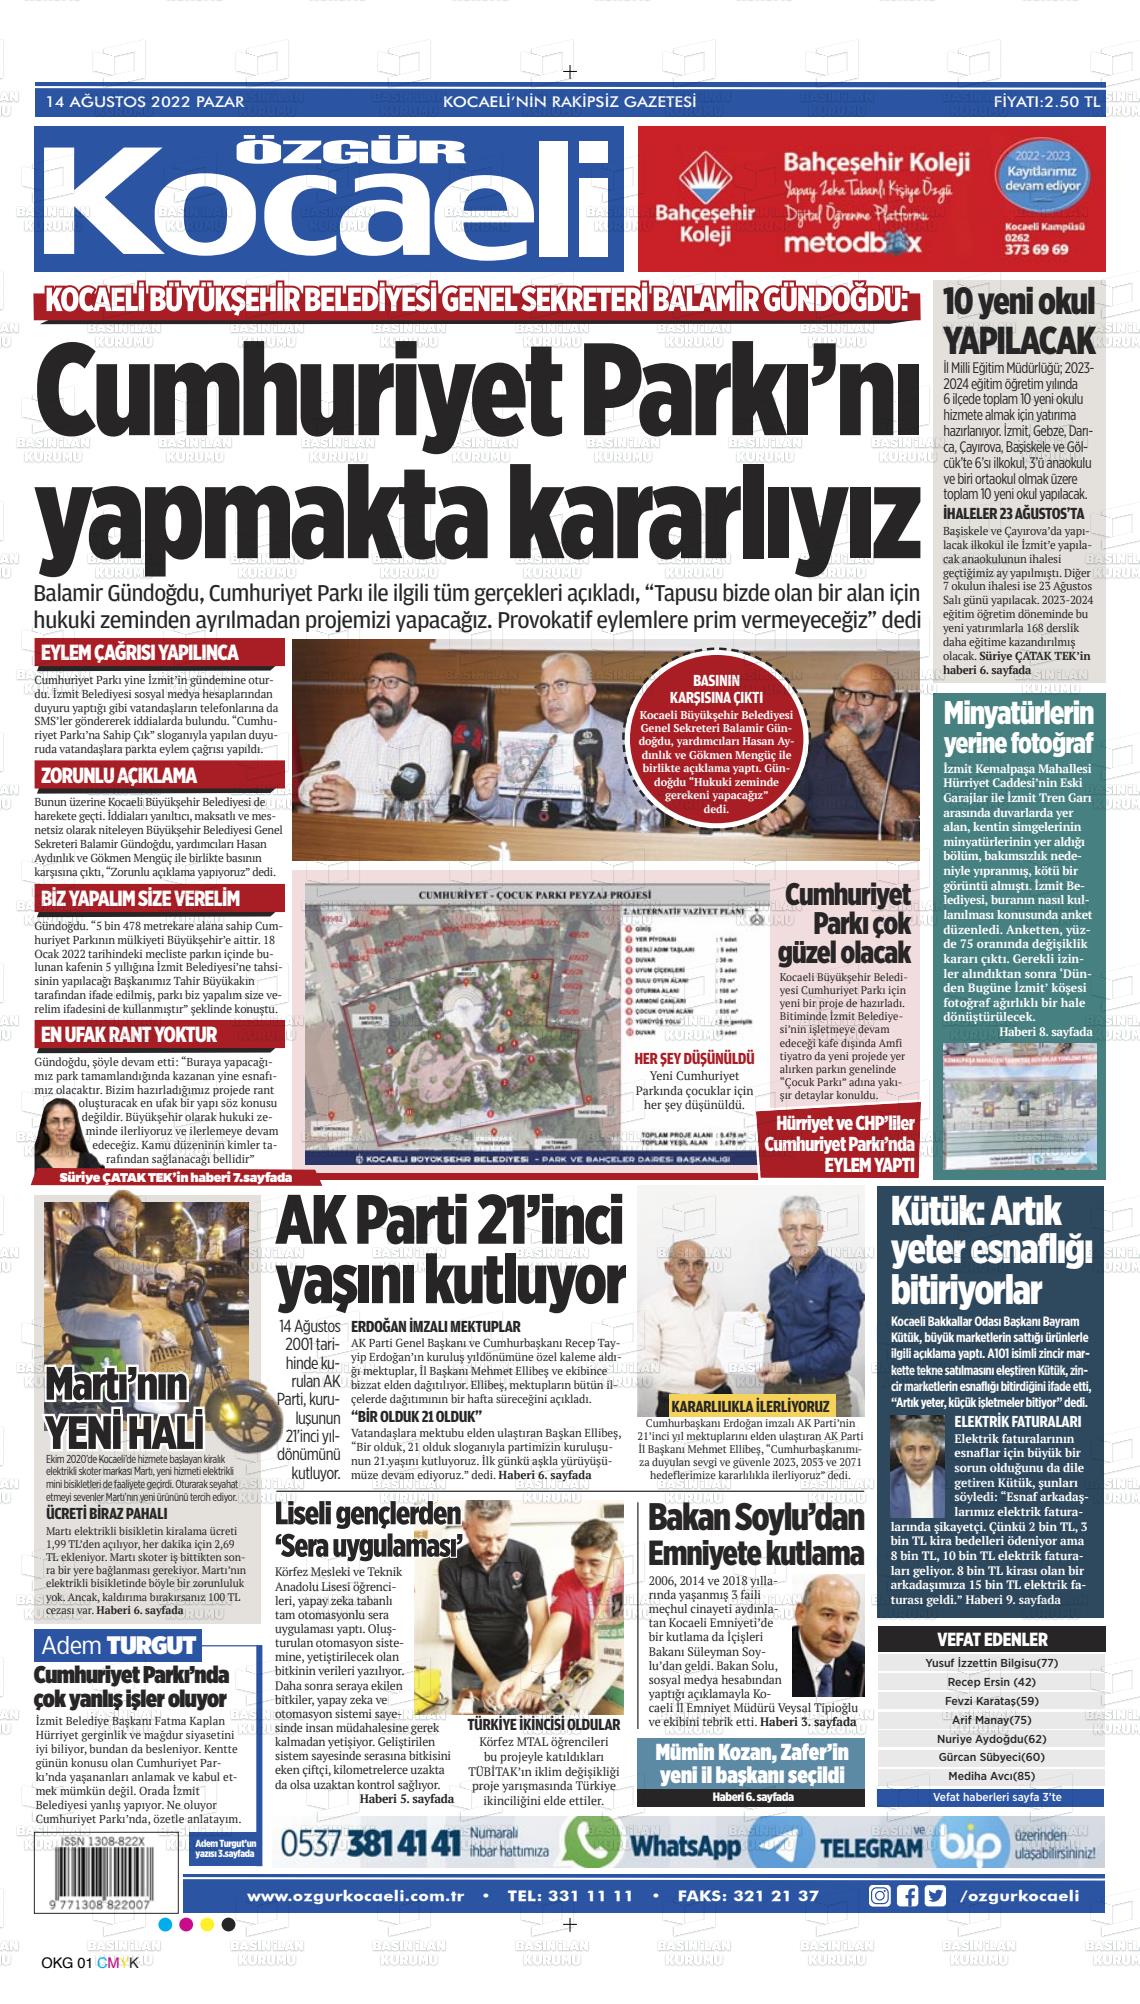 14 Ağustos 2022 Özgür Kocaeli Gazete Manşeti